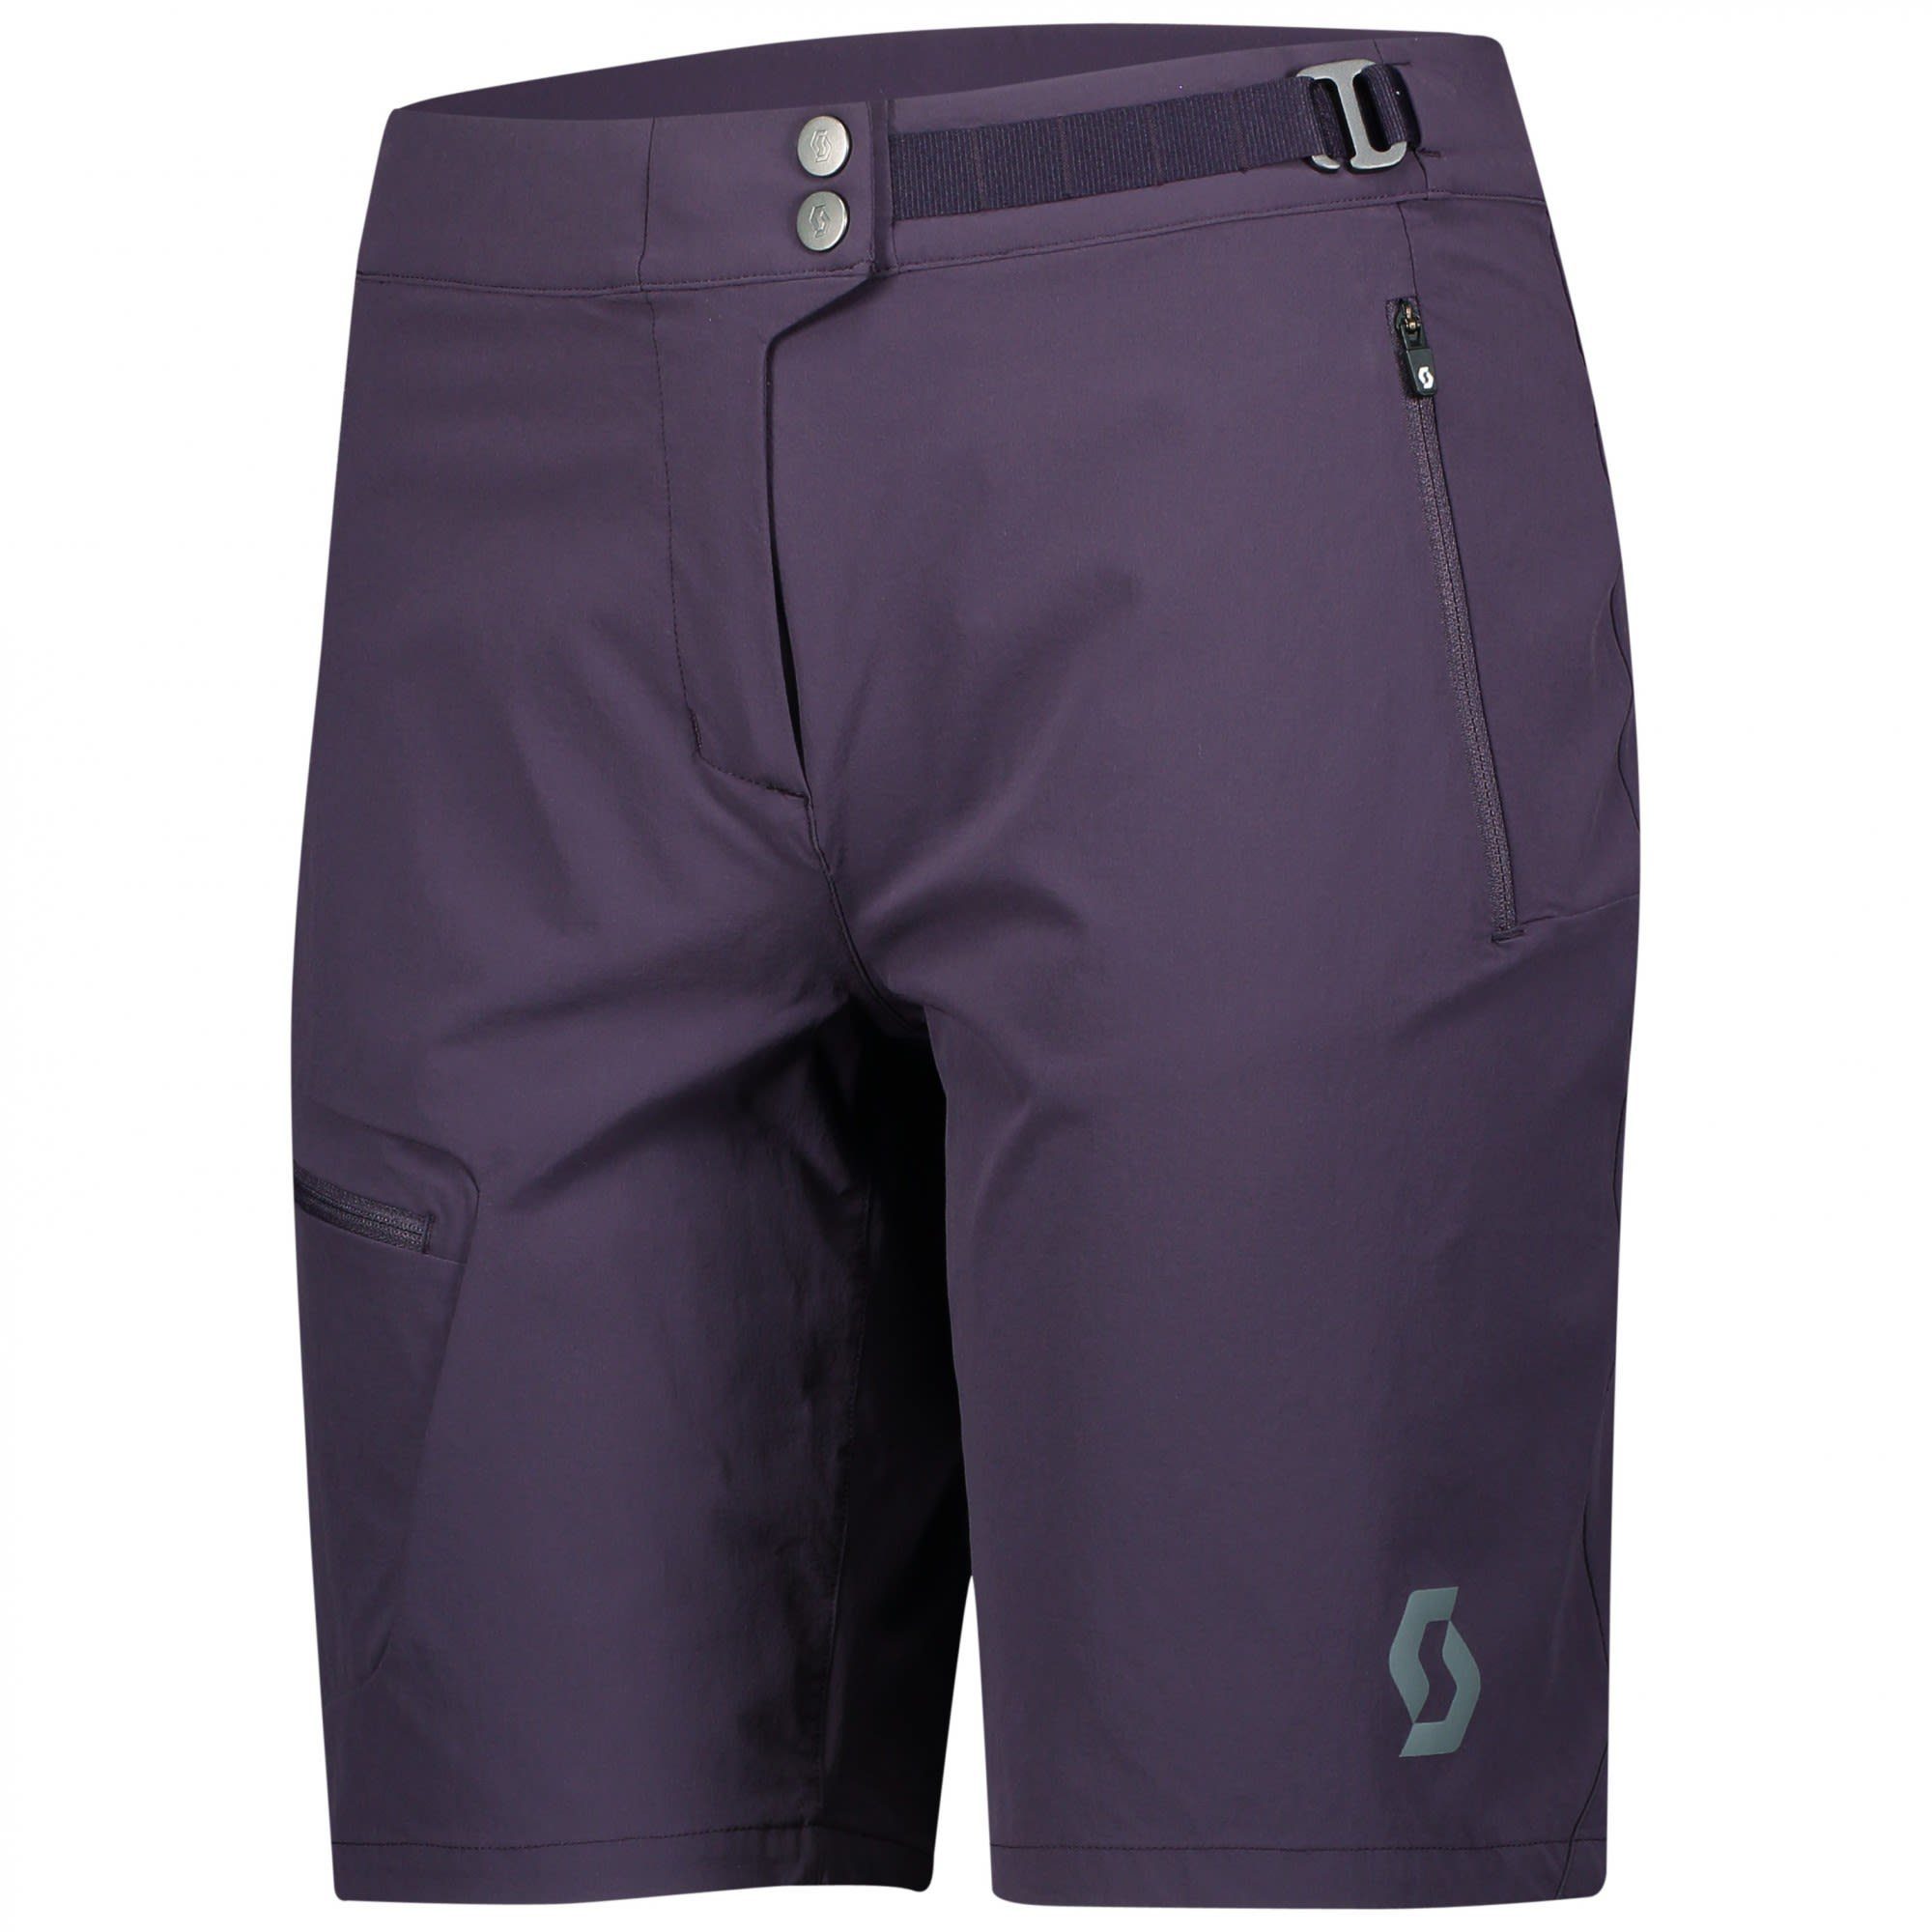 Scott Strandshorts W Damen Shorts Purple Light Dark Shorts Scott Explorair